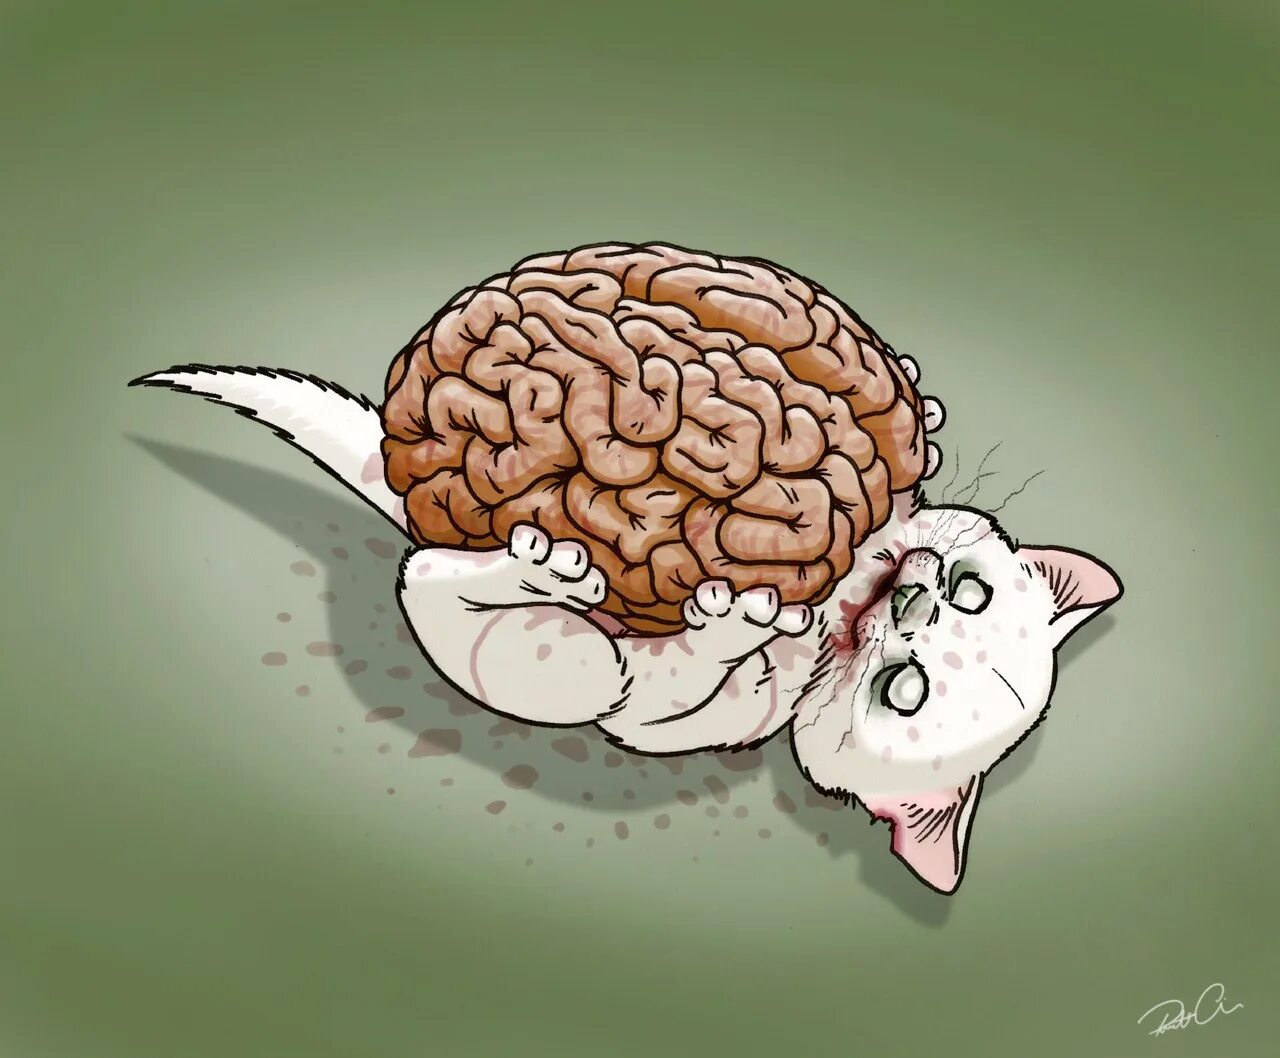 Картинка про мозг. Мозг рисунок. Смешной мозг. Смешные мозги.